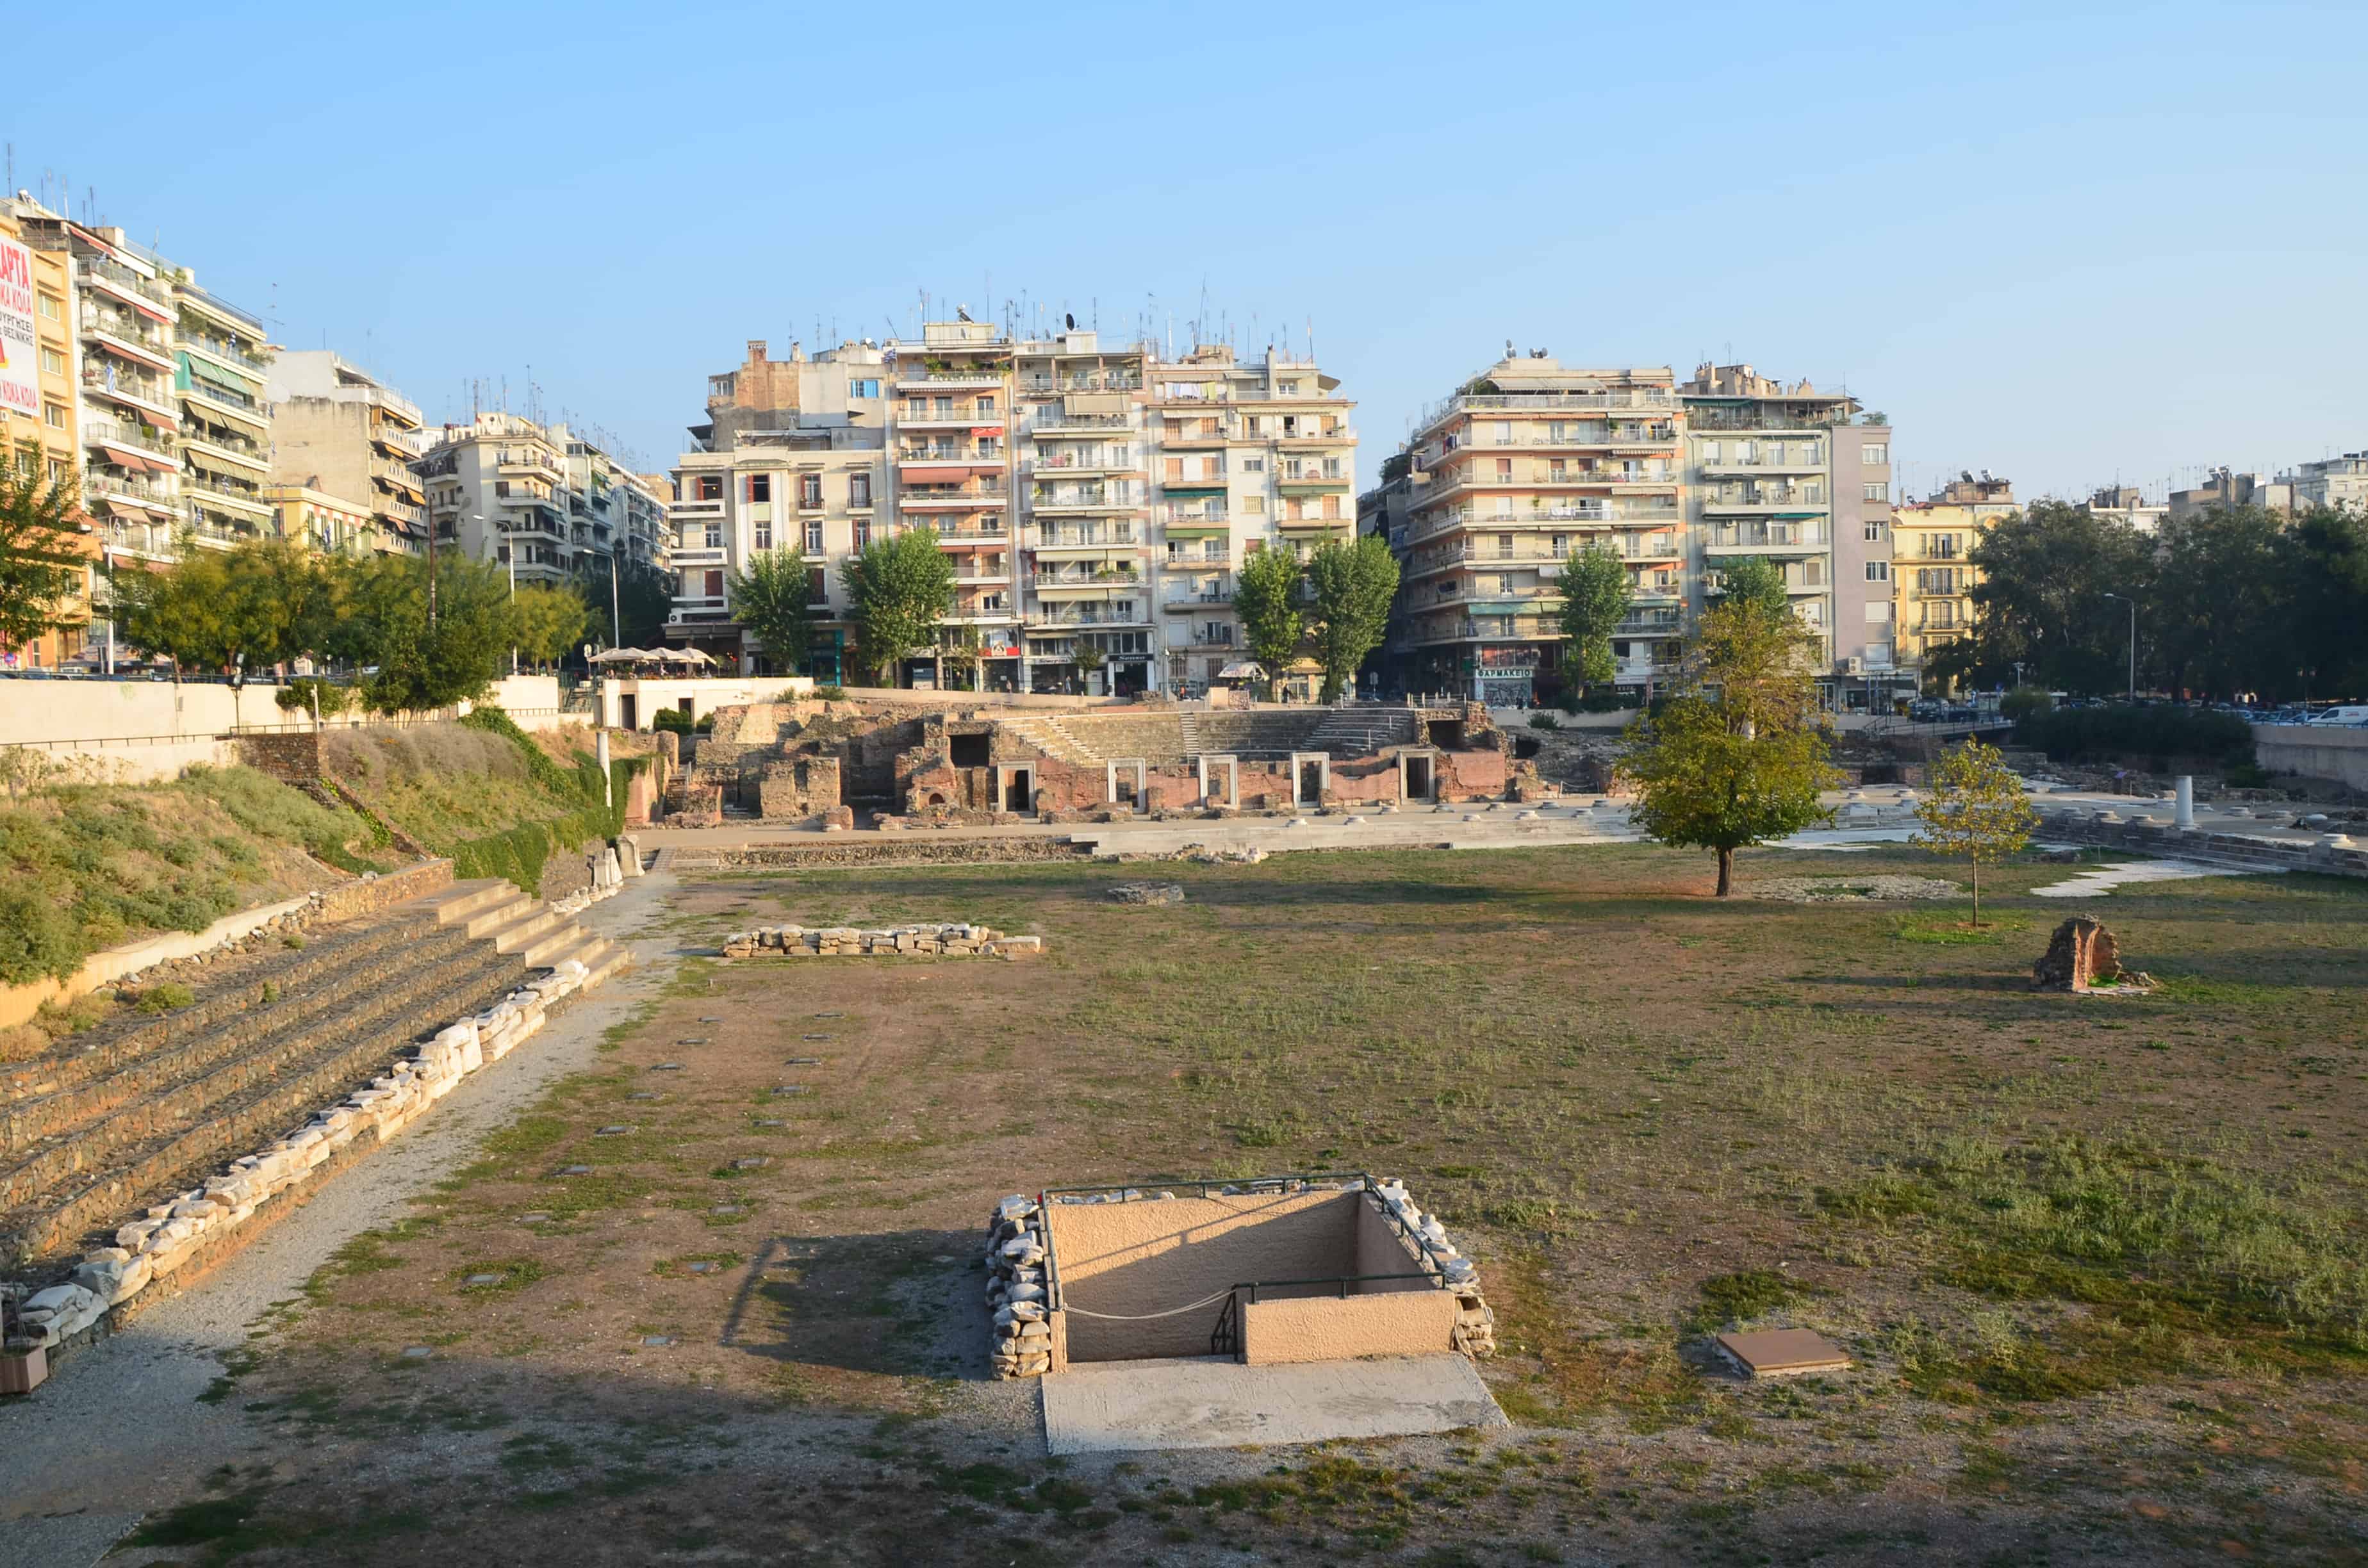 Roman Forum in Thessaloniki, Greece